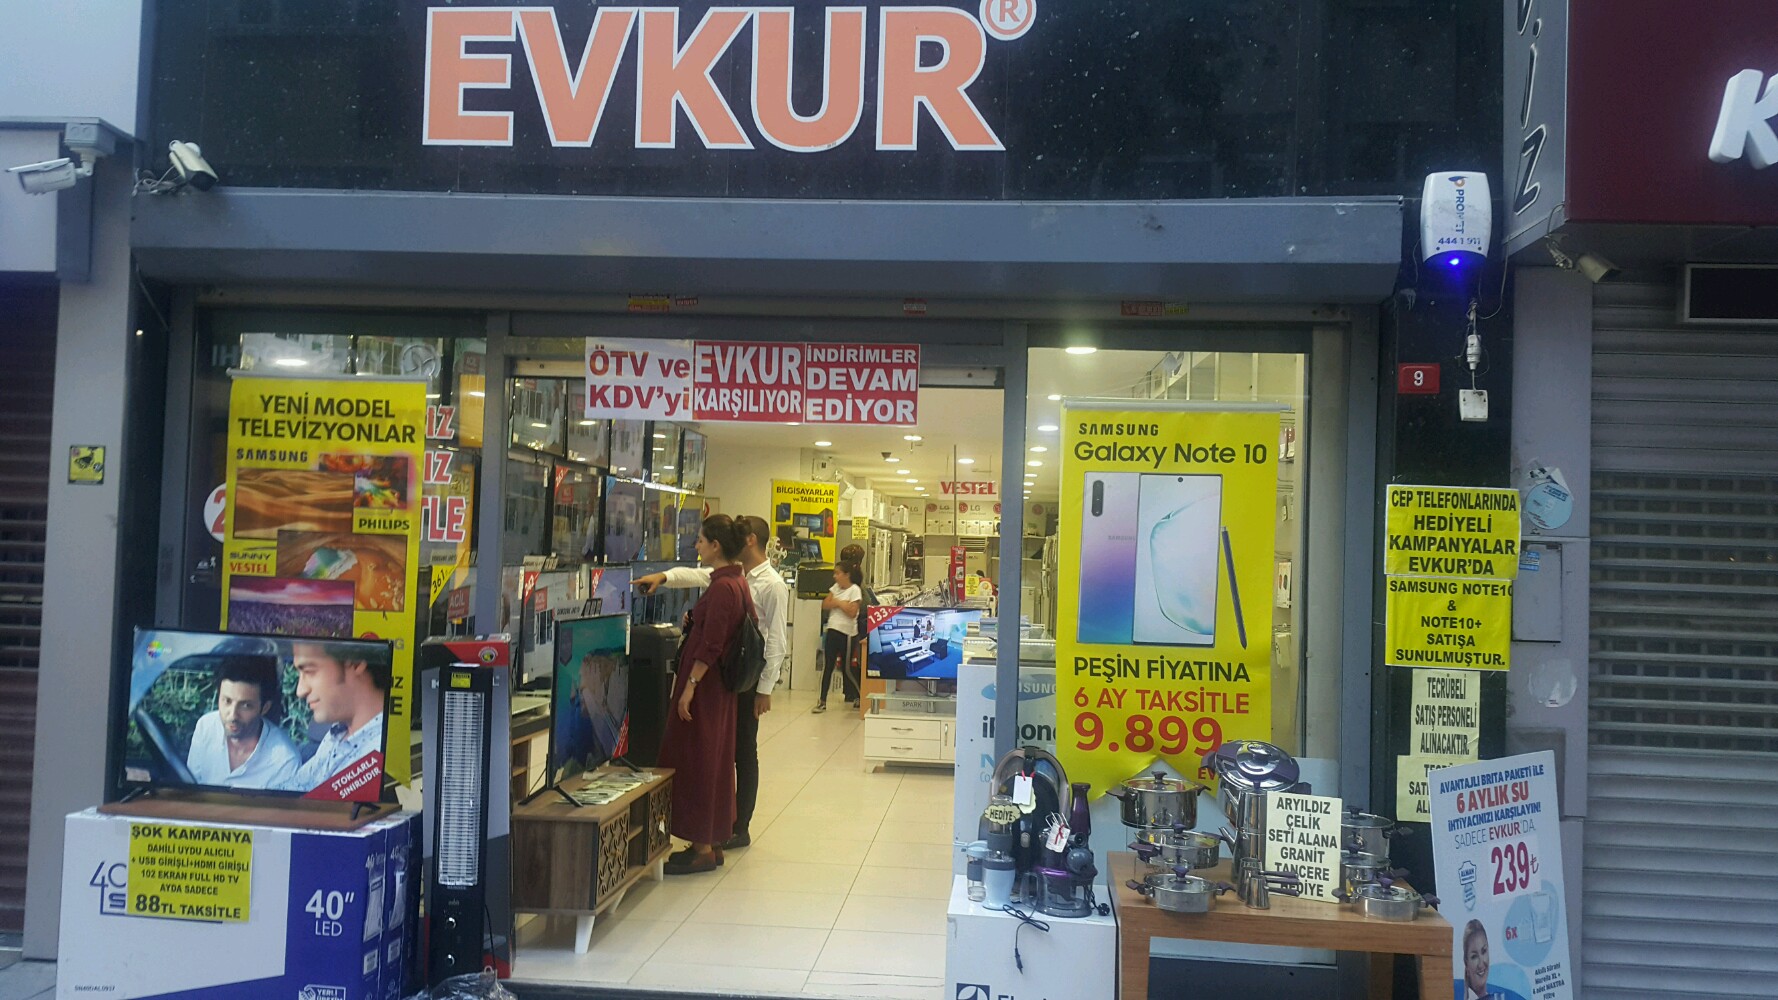 Evsa Alışveriş Merkezi, department store, Ankara, Mamak, Dereboyu